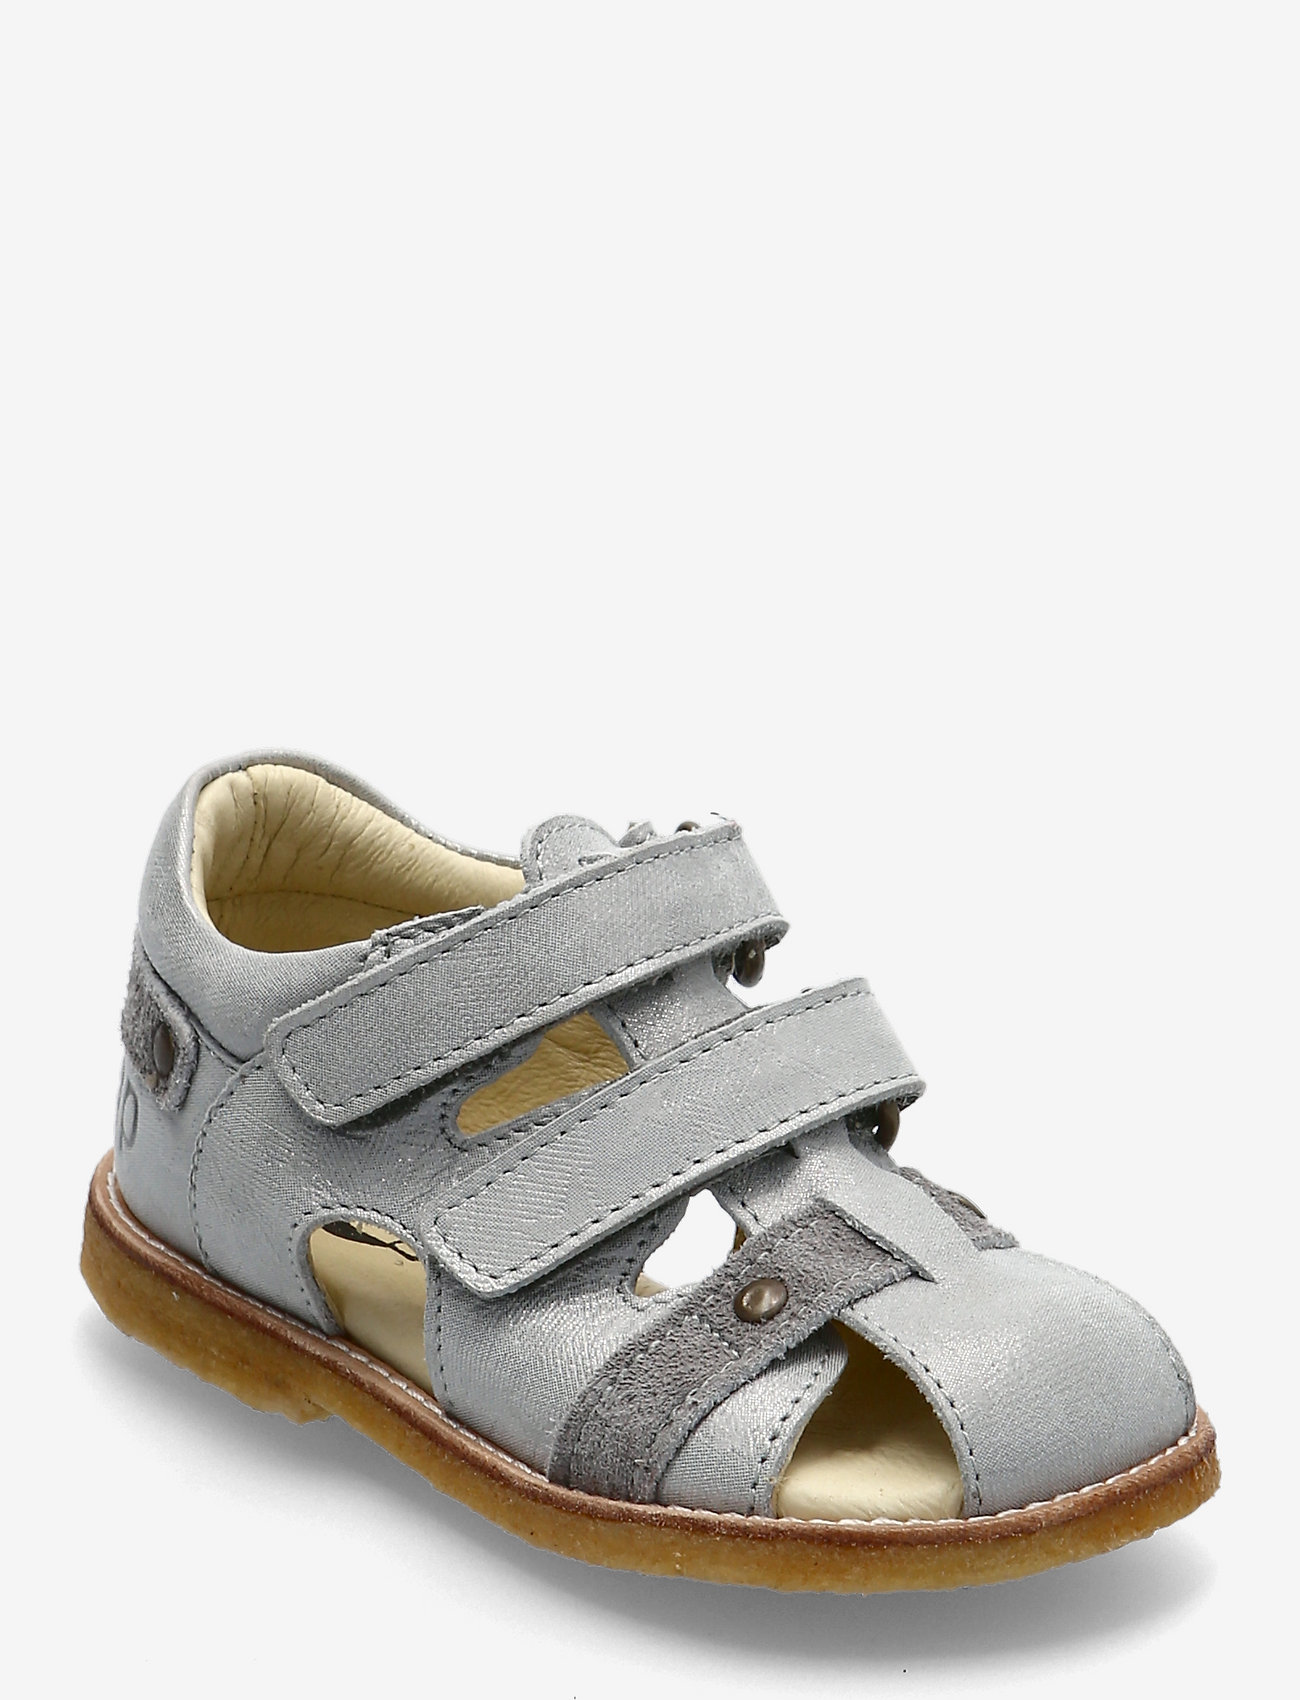 Arauto RAP - HAND MADE SANDAL - sandals - star silver - 0